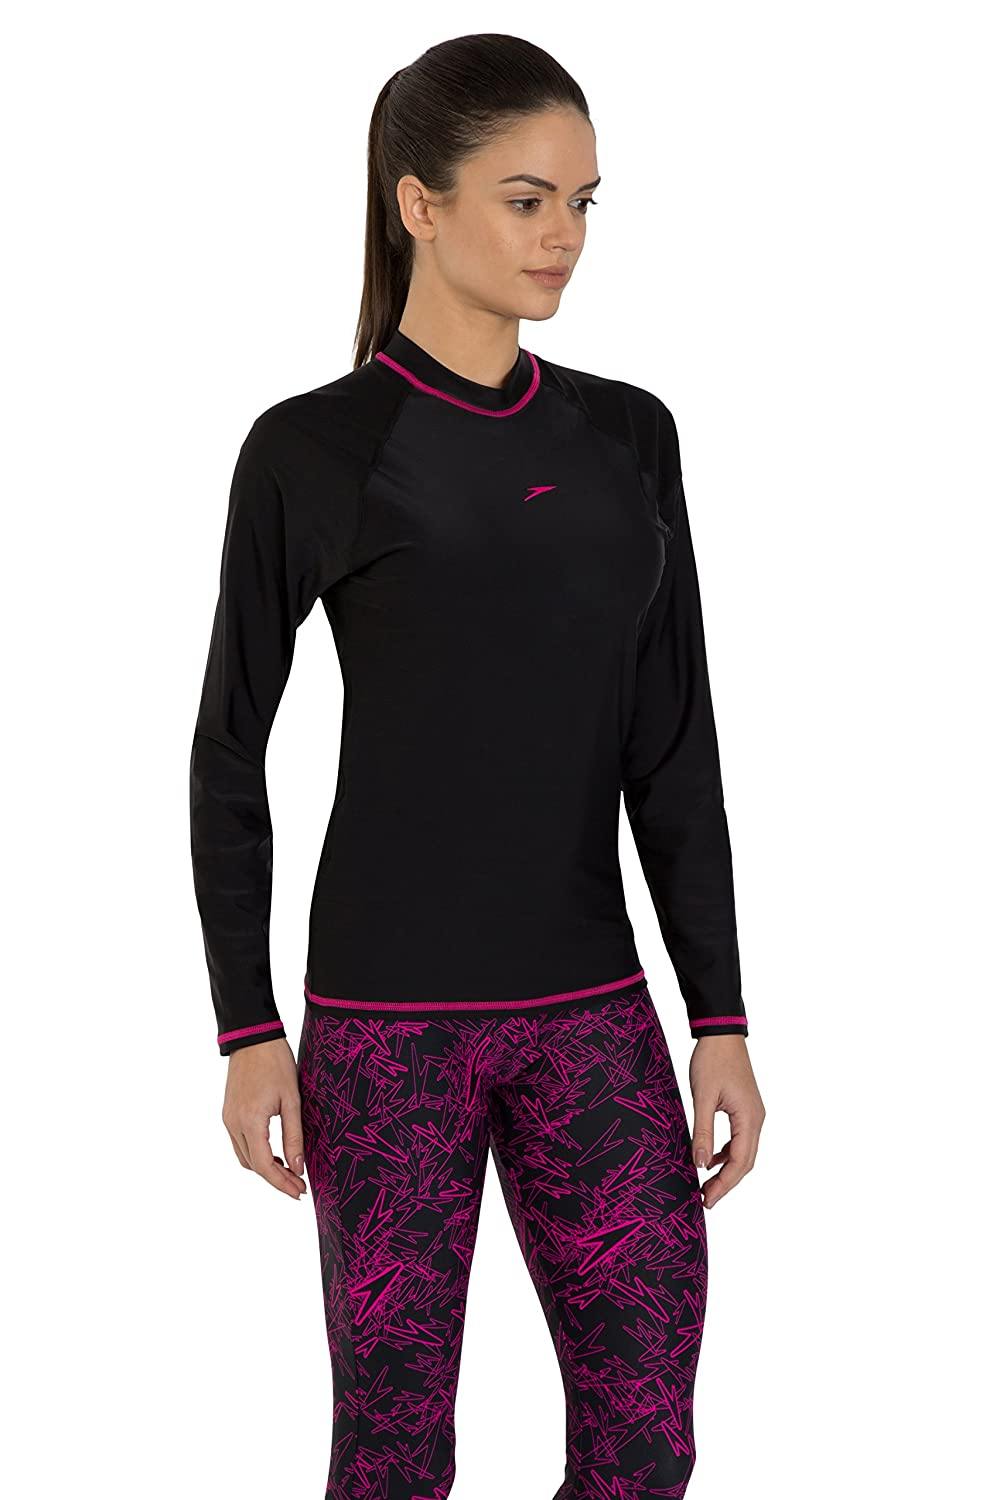 Speedo Female swimwear Long Sleeve Suntop (8PSF01B344_Black / Electric Pink) - Best Price online Prokicksports.com